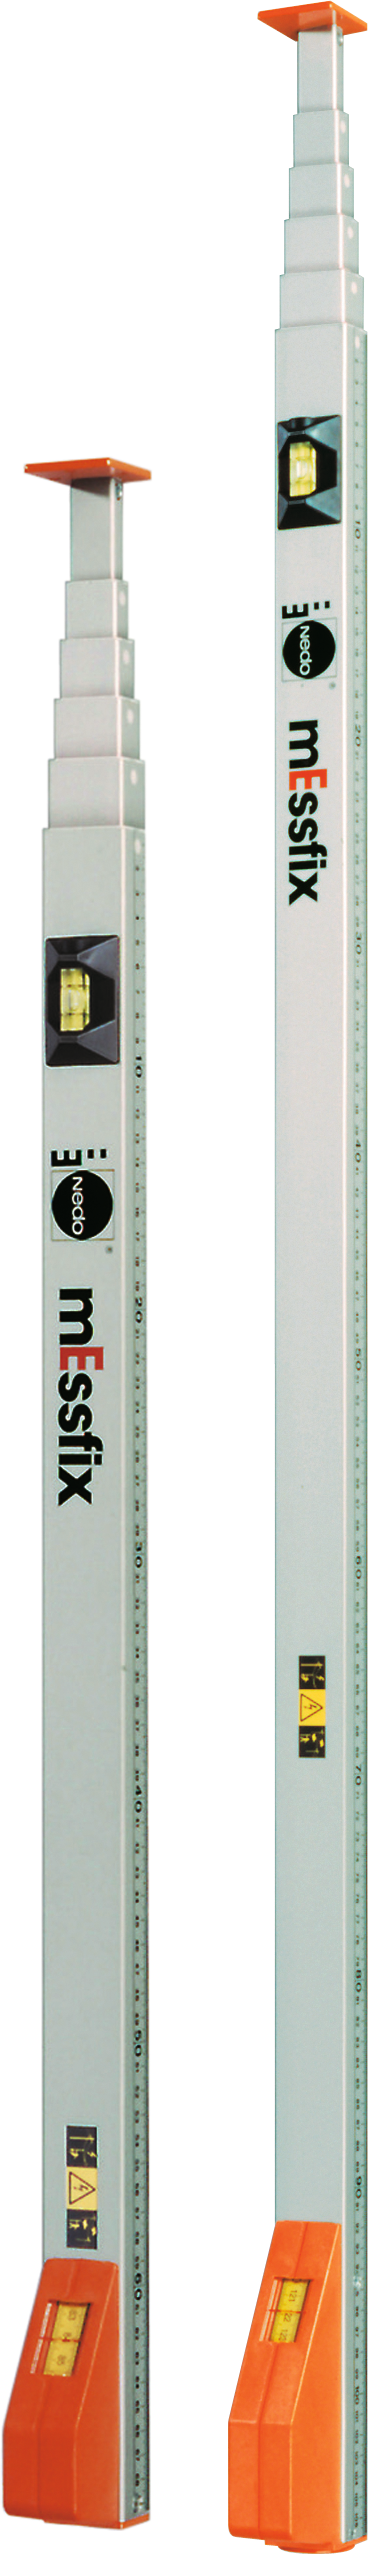 Längenmaßstab mEssfix compact mit Teleskopauszugmm-Teilung MB0,91-5,01m